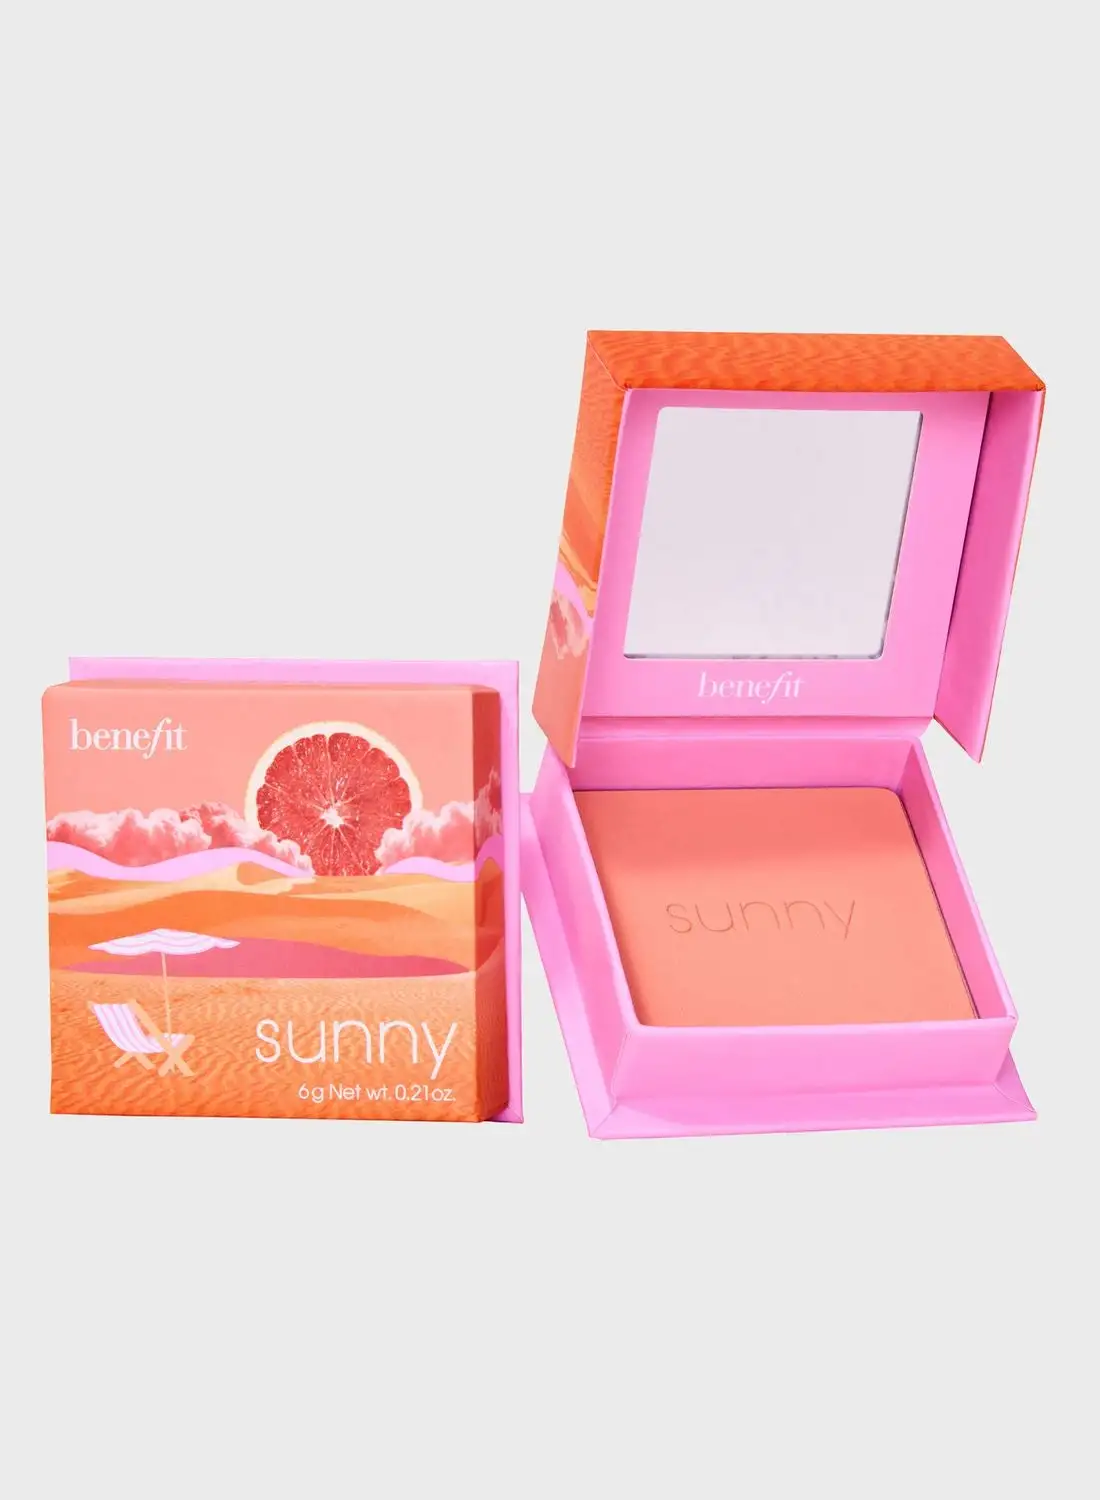 Benefit Cosmetics Sunny Warm Coral Blush